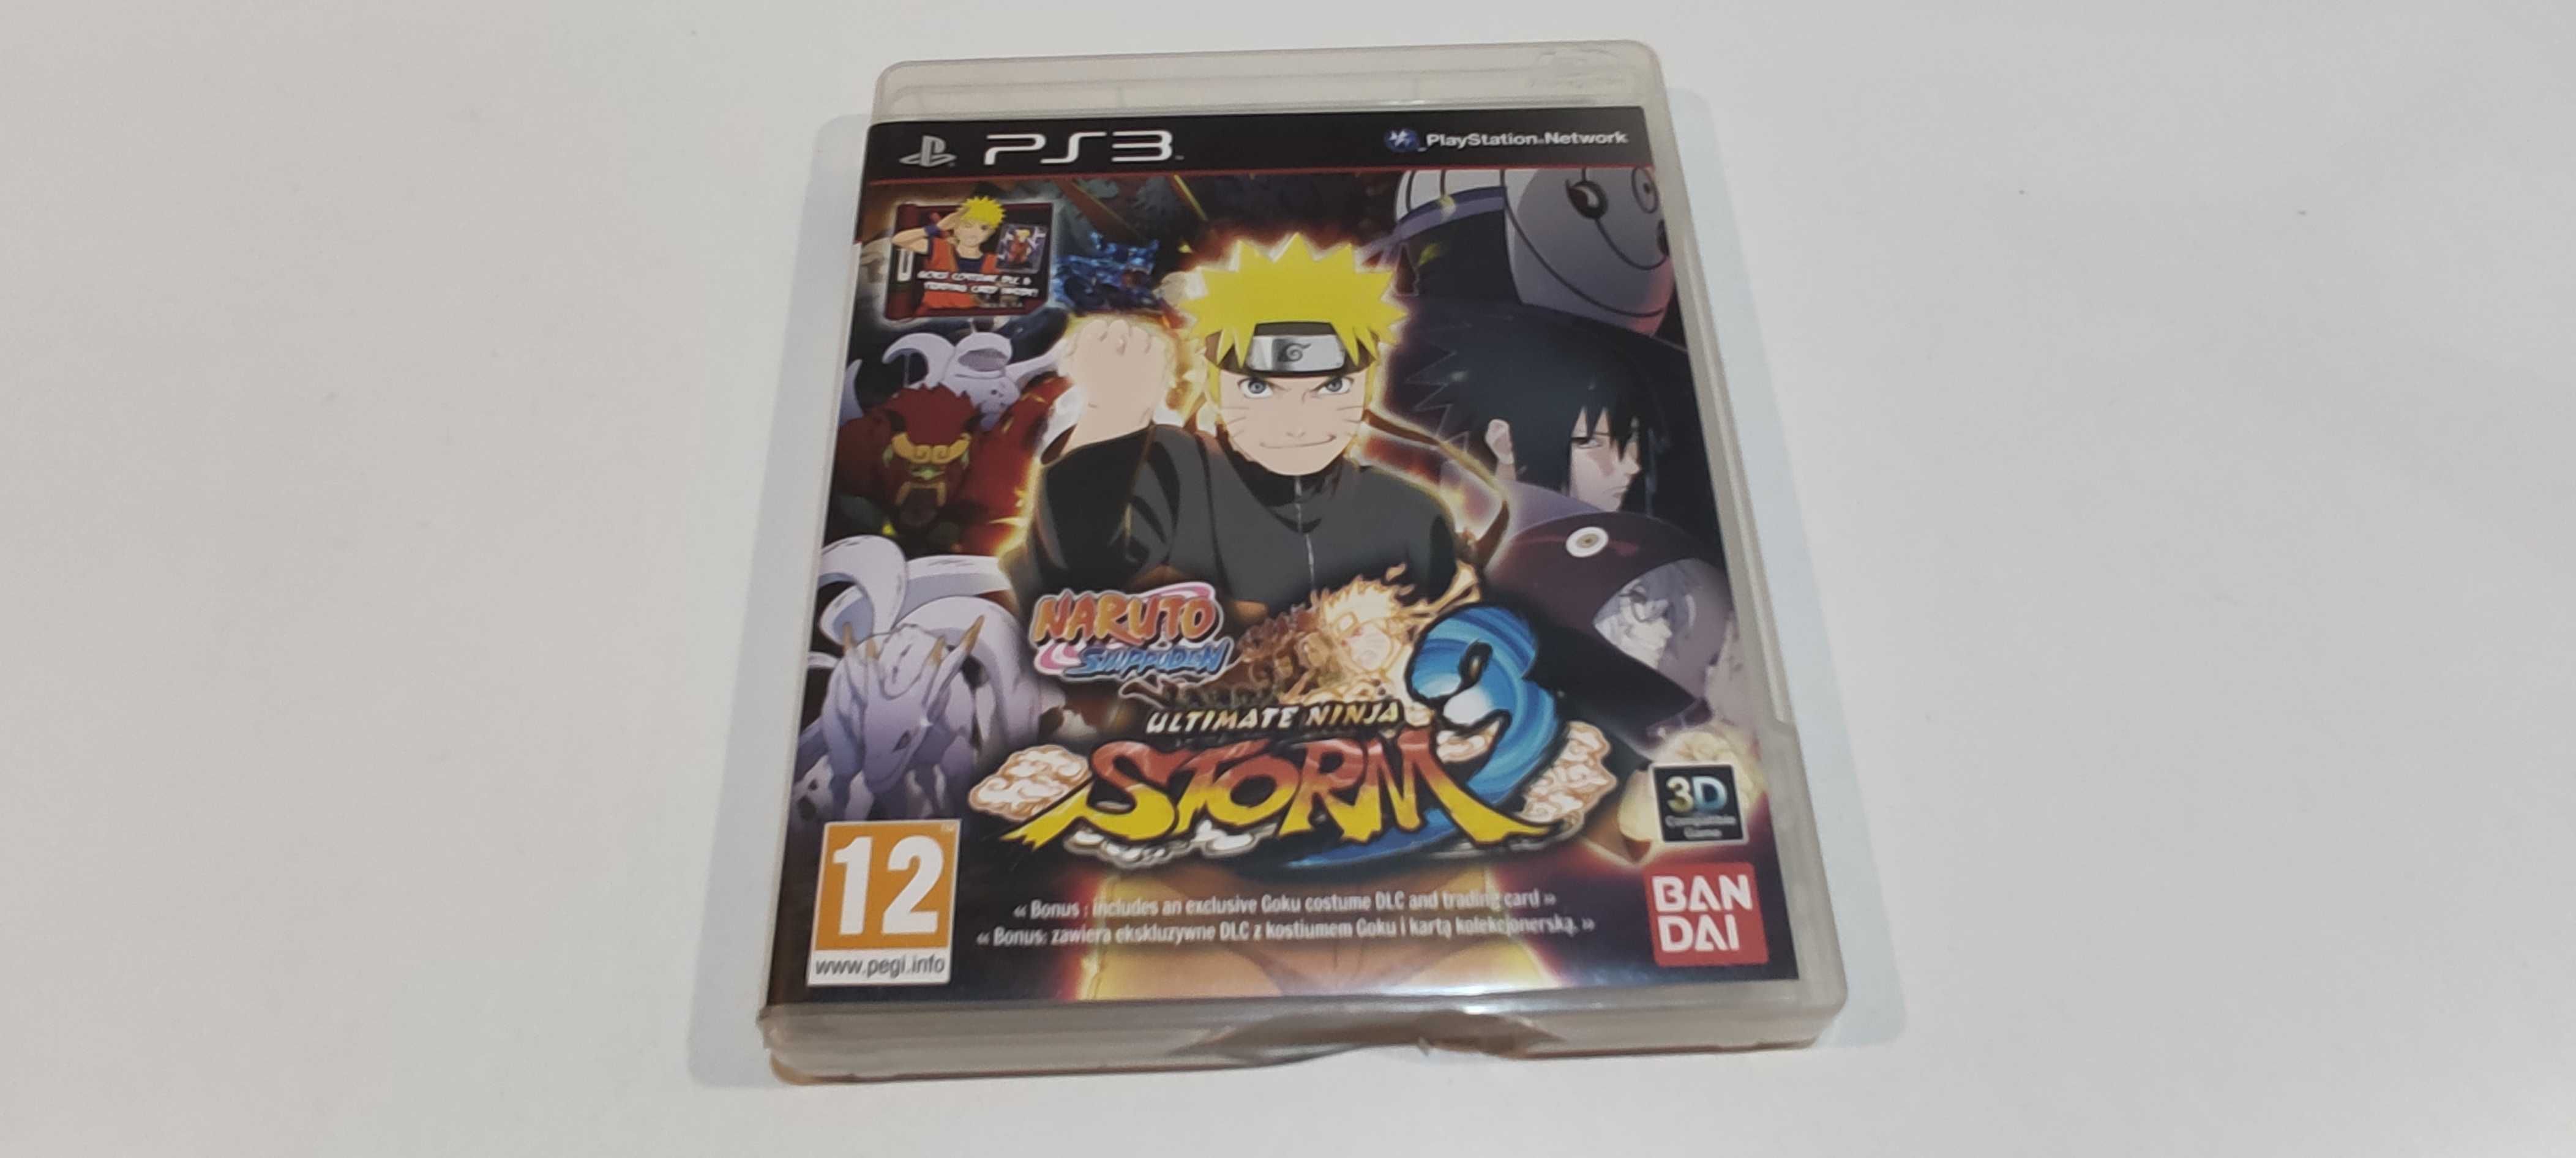 Gra Naruto Shippuden Ultimate Ninja Storm 3 PS3 PlayStation 3